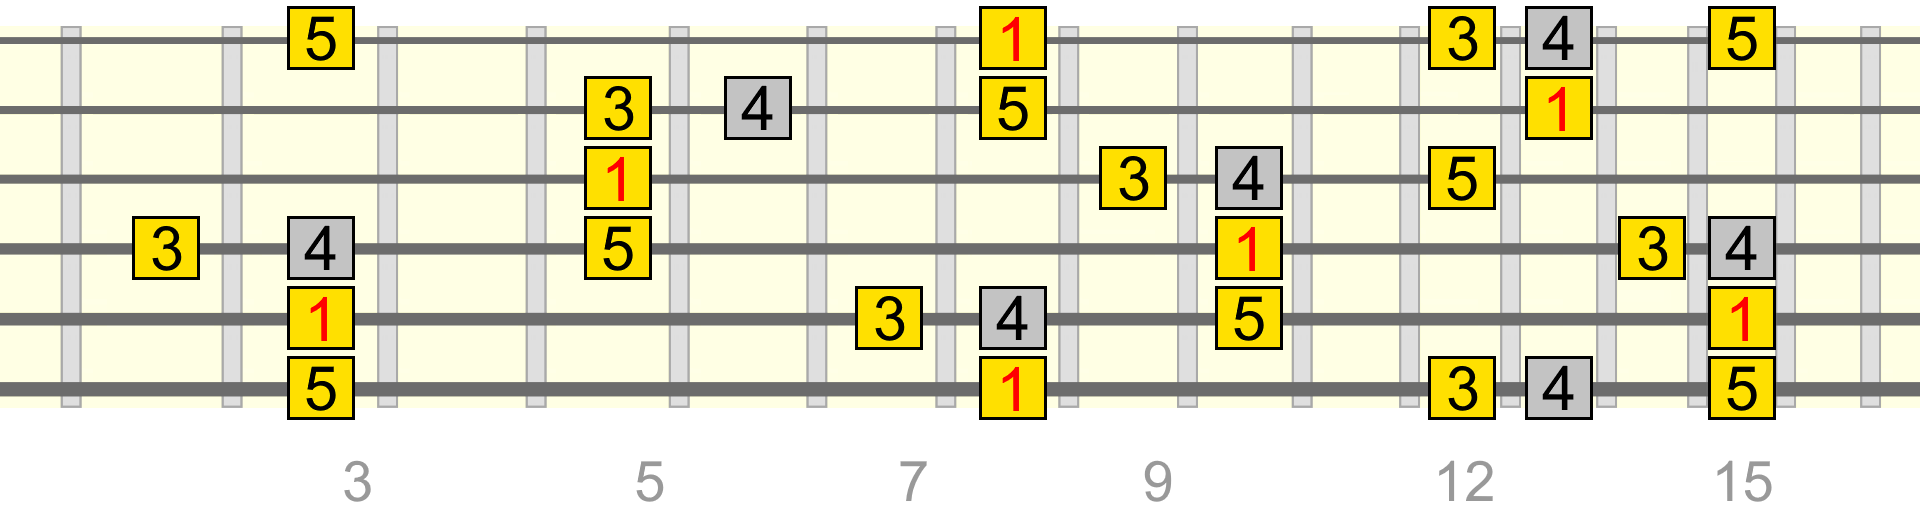 c-add-4-full-pattern